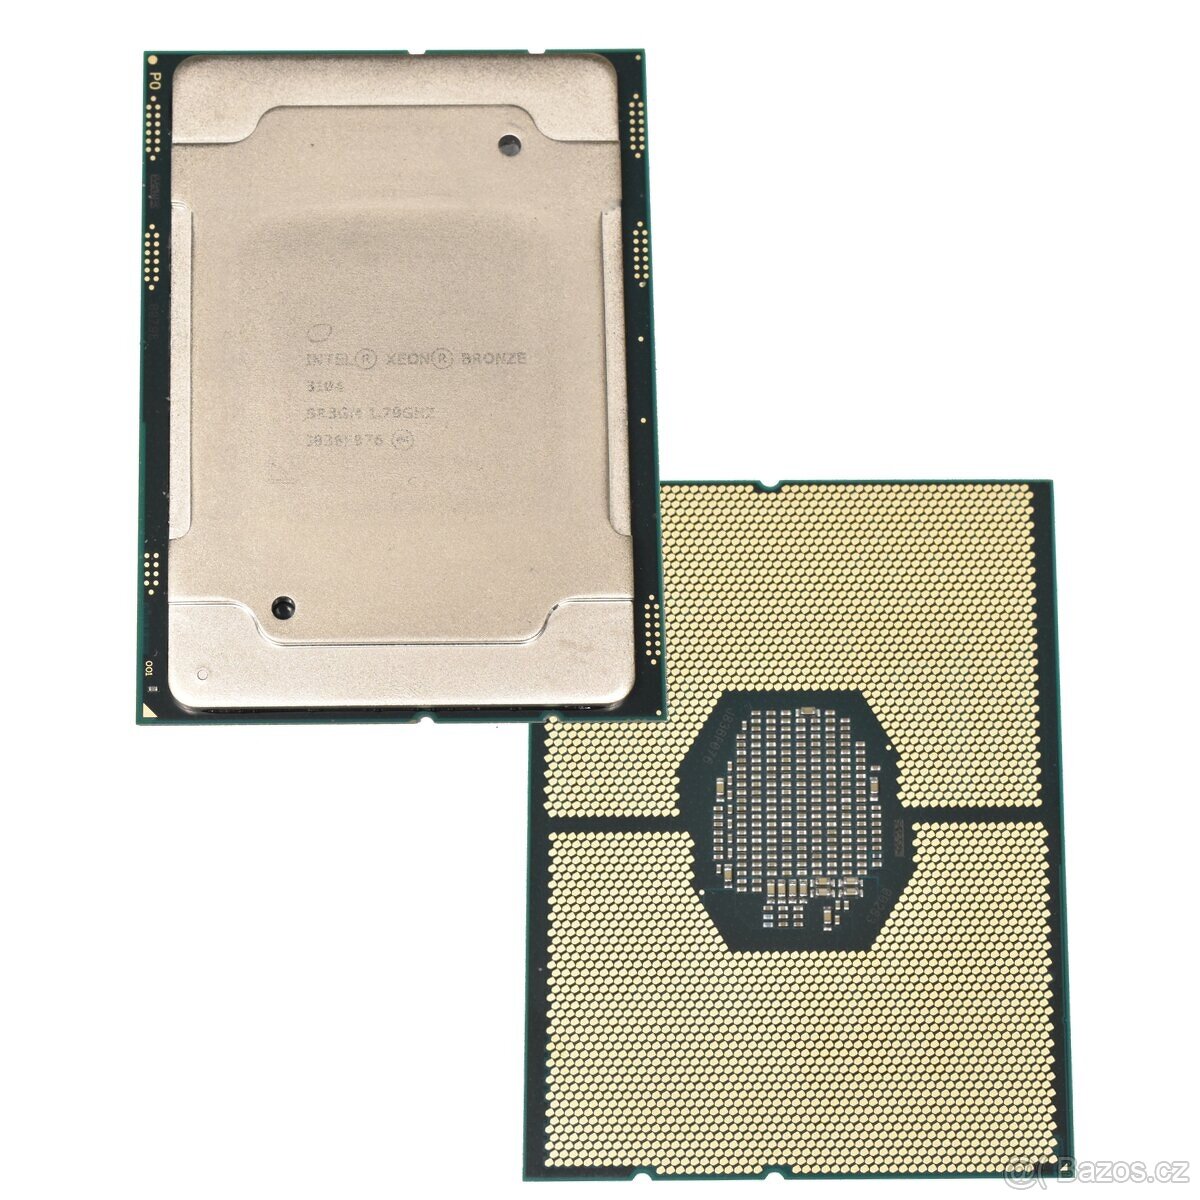 Intel Xeon bronze 3106